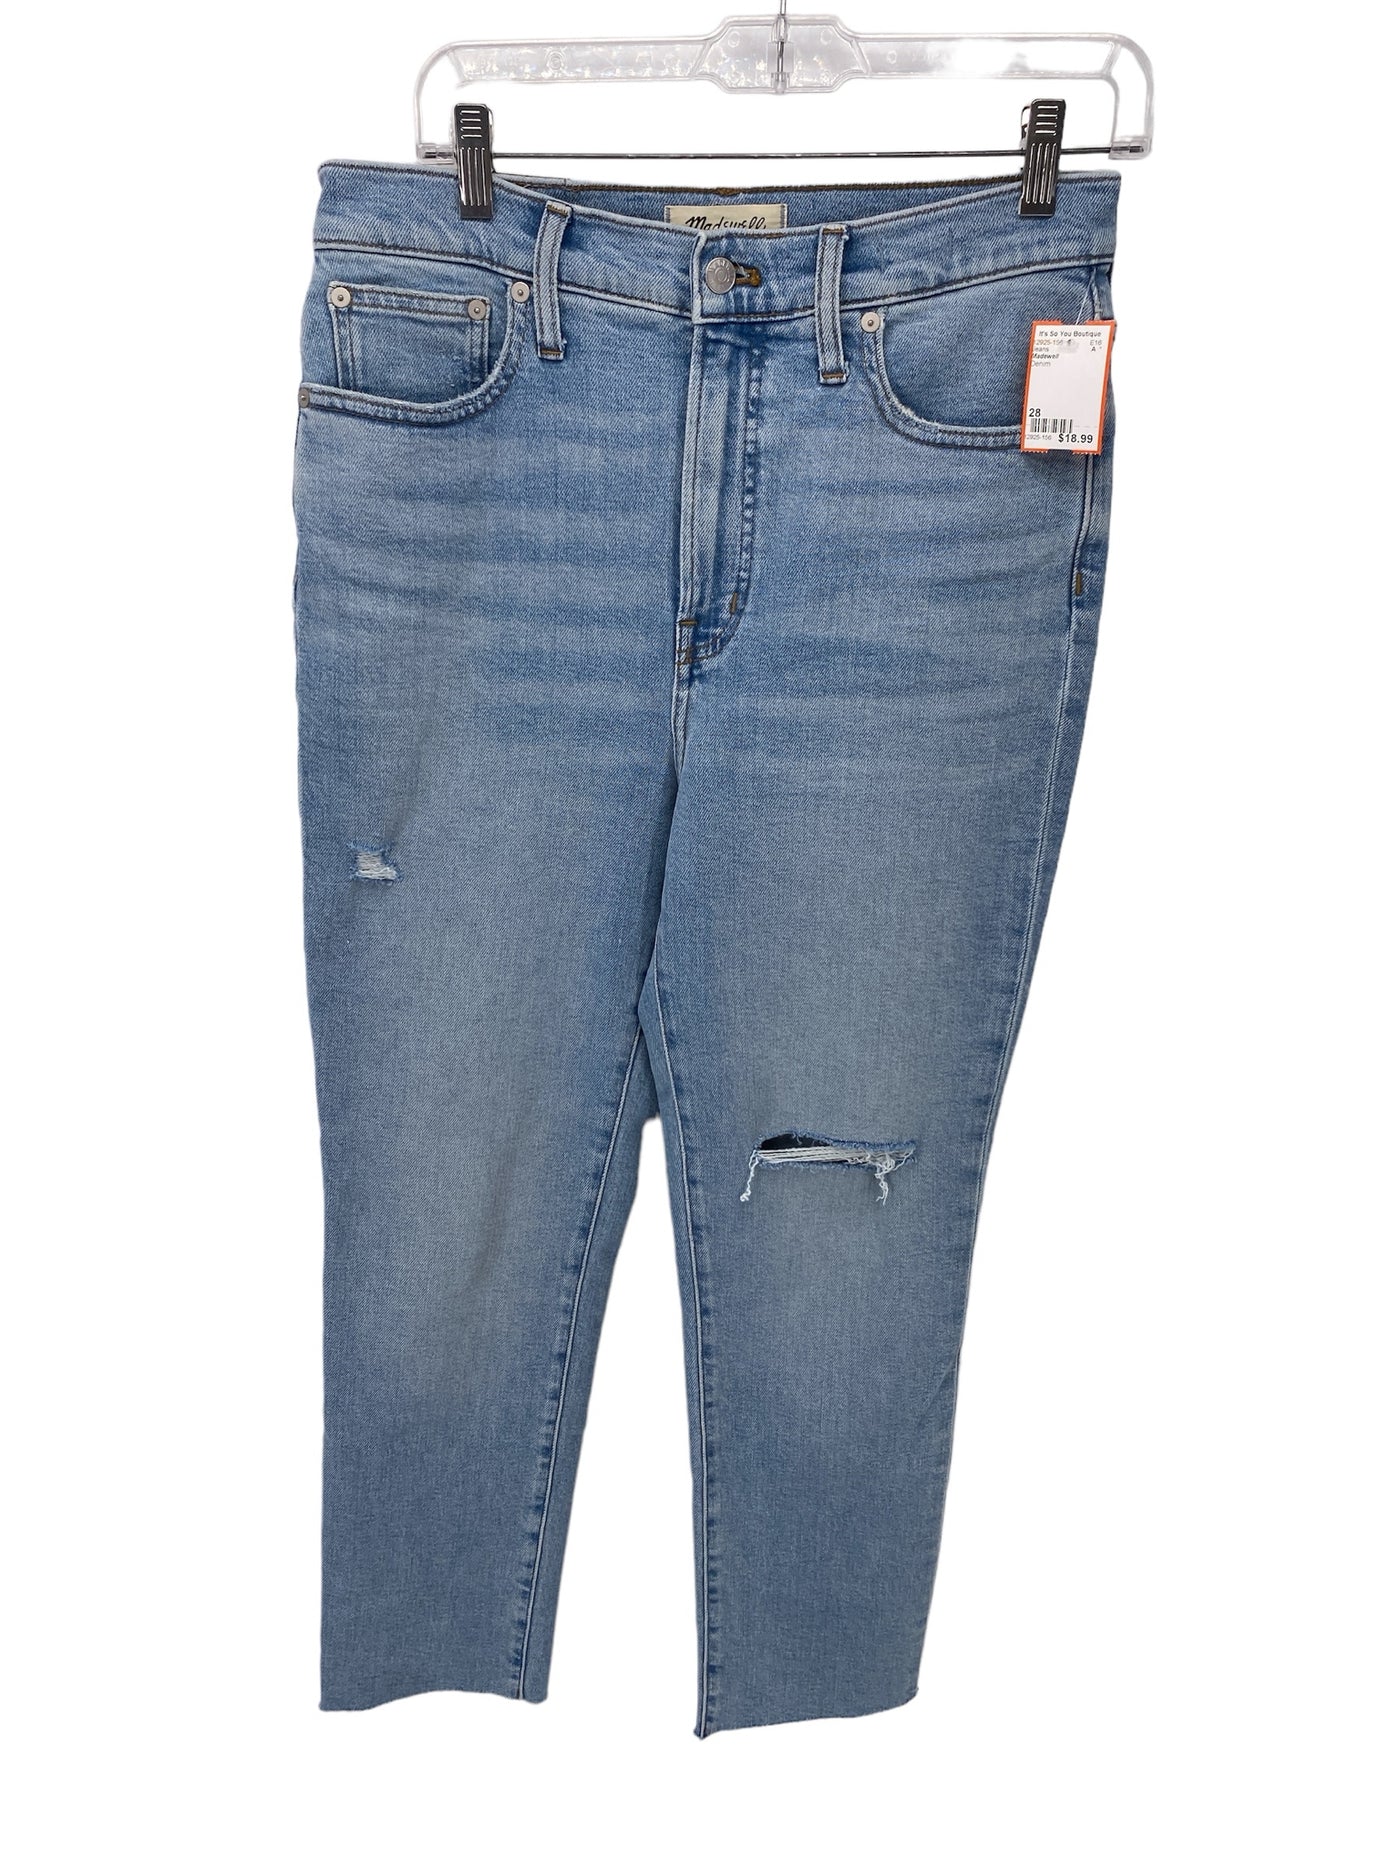 Madewell Misses Size 28 Denim Jeans